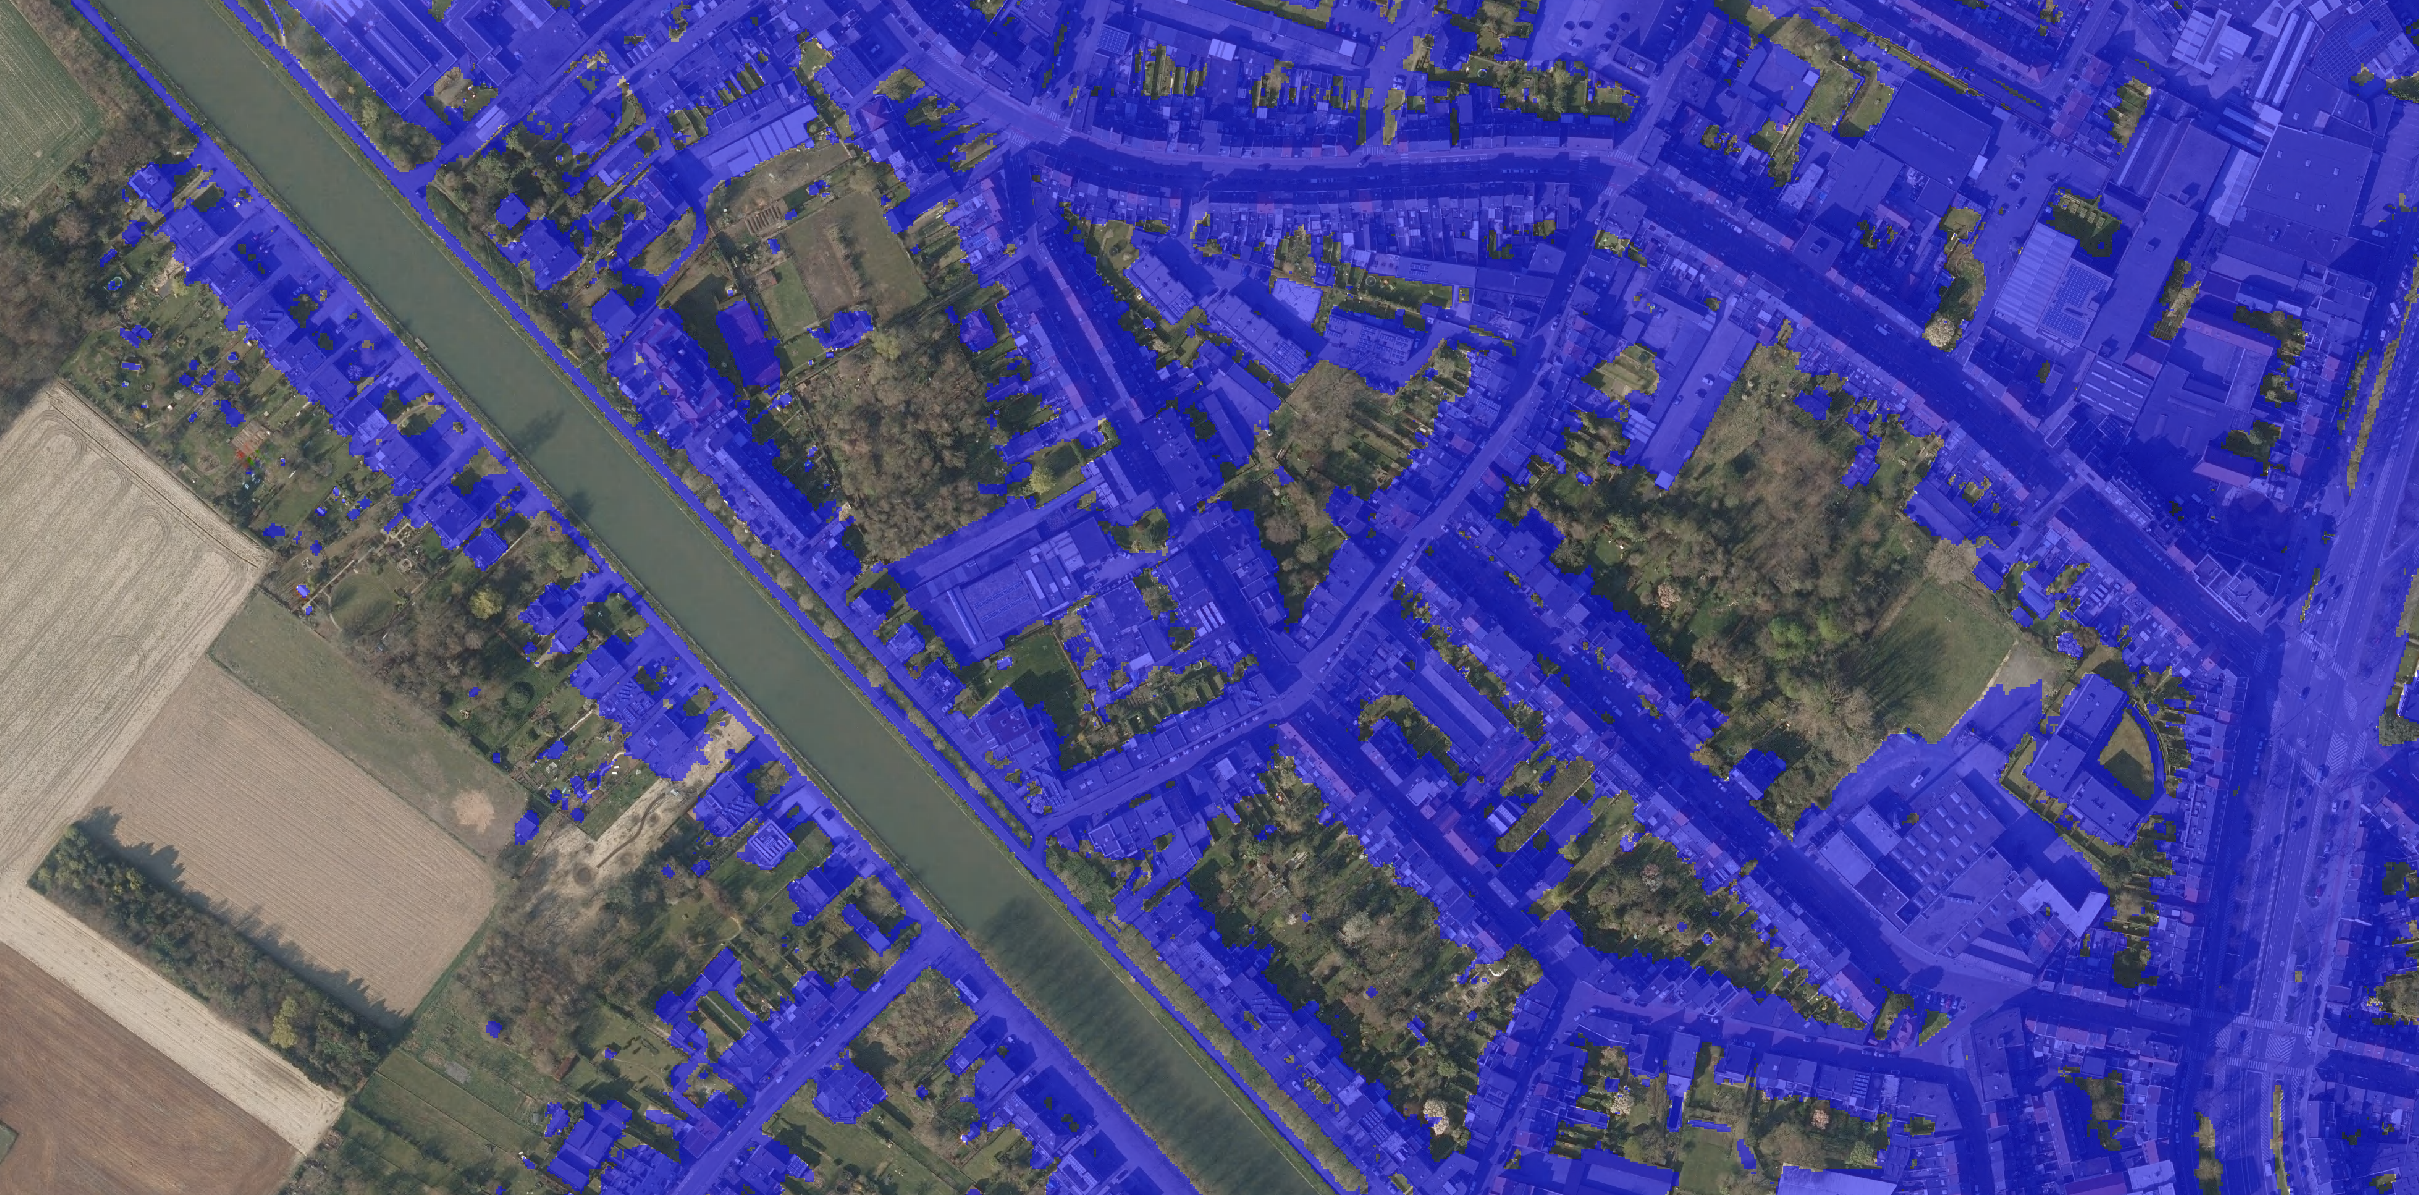 Visualisation of the Soil Cover Map 2020 near the city of Mechelen.